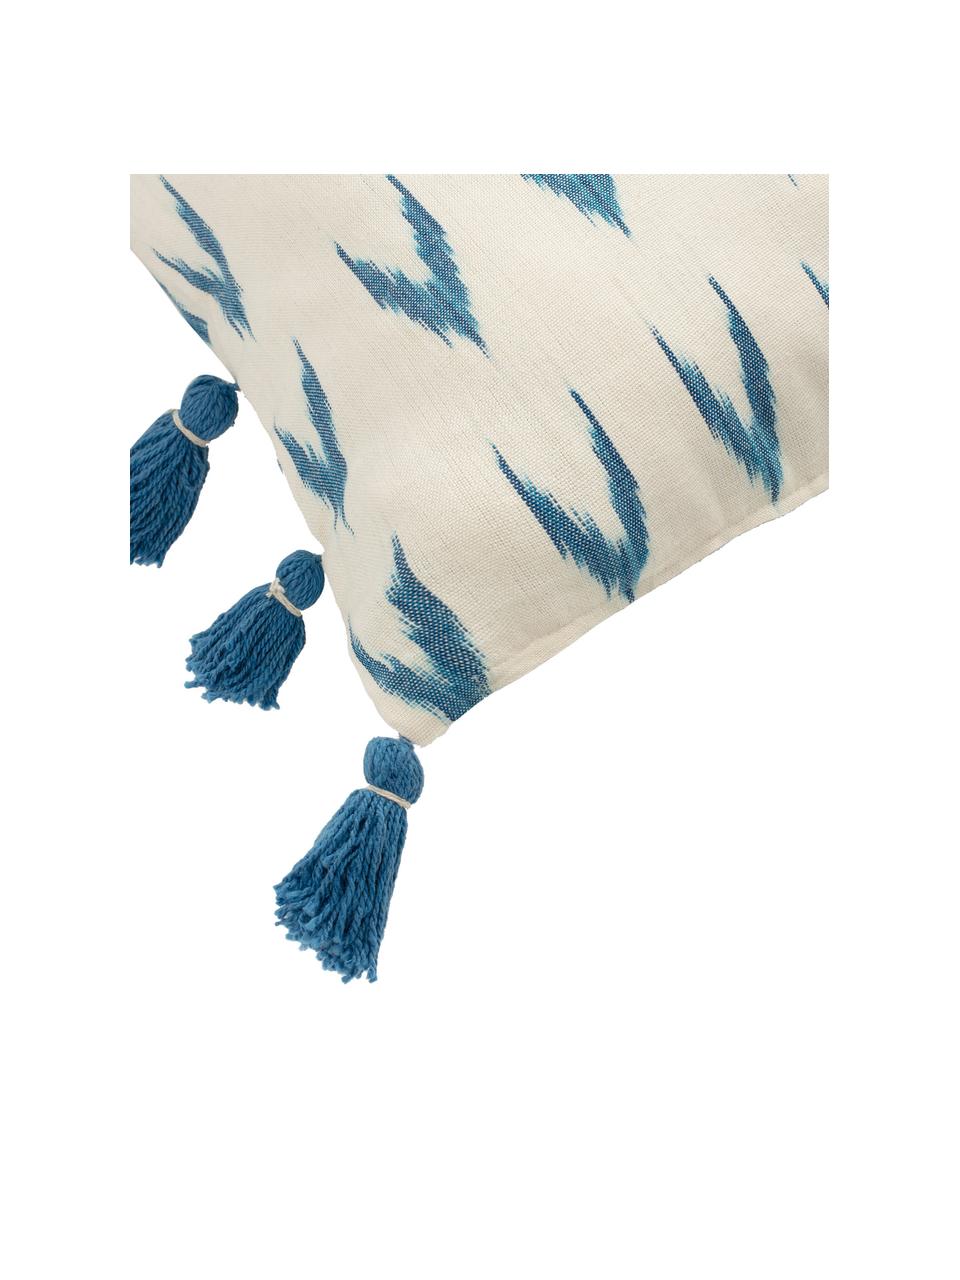 Federa arredo boho con nappe blu Cala, 100% cotone, Blu, bianco, Larg. 30 x Lung. 60 cm